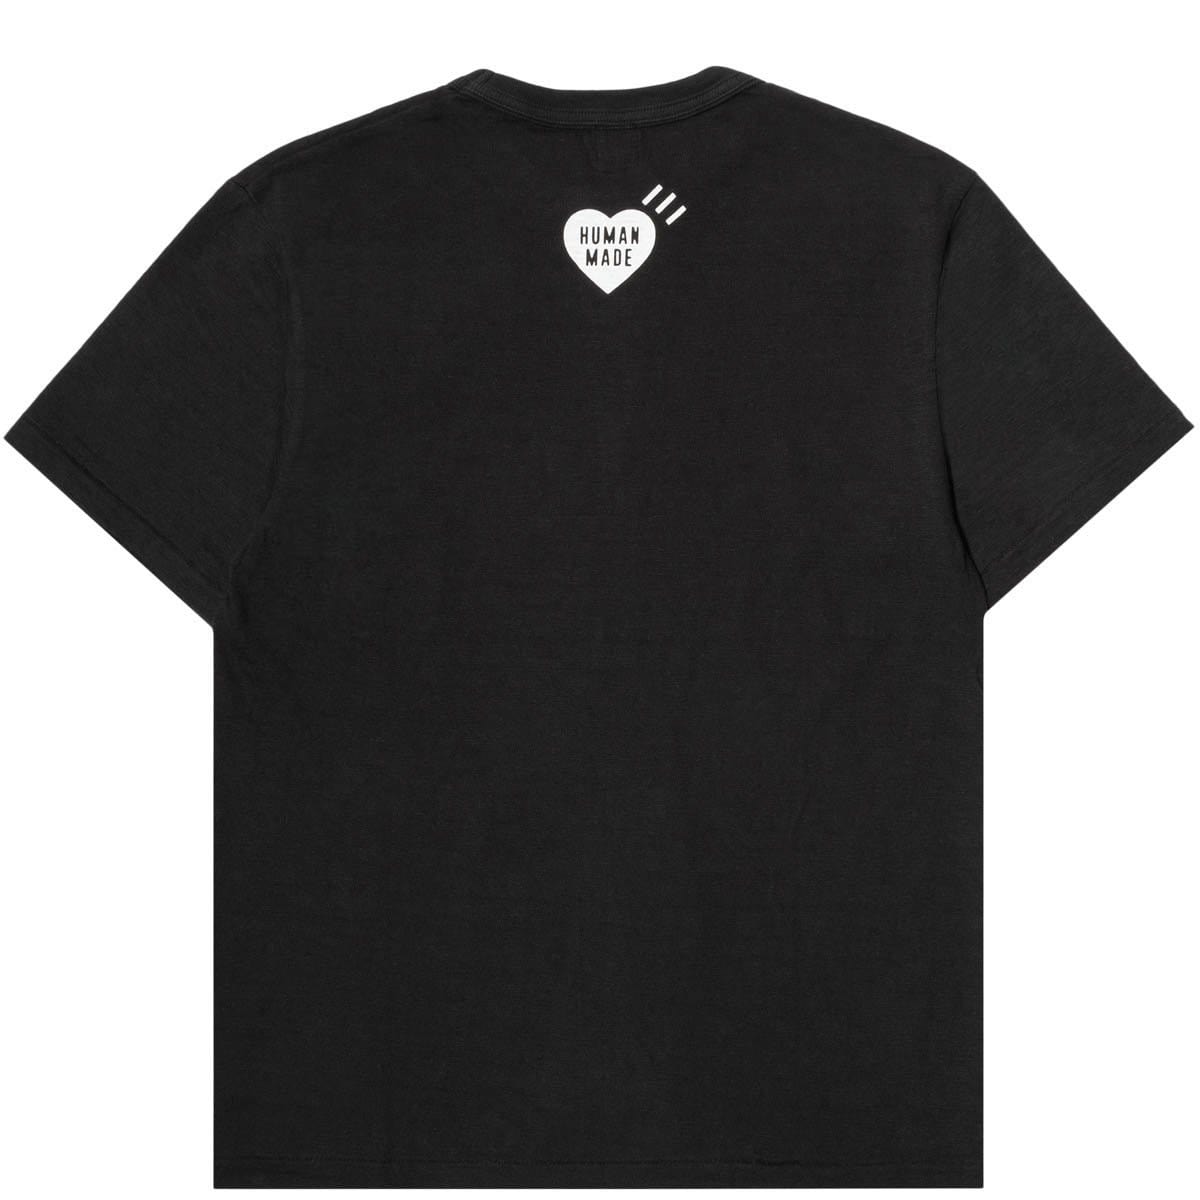 Human Made T-Shirts T-SHIRT #2210